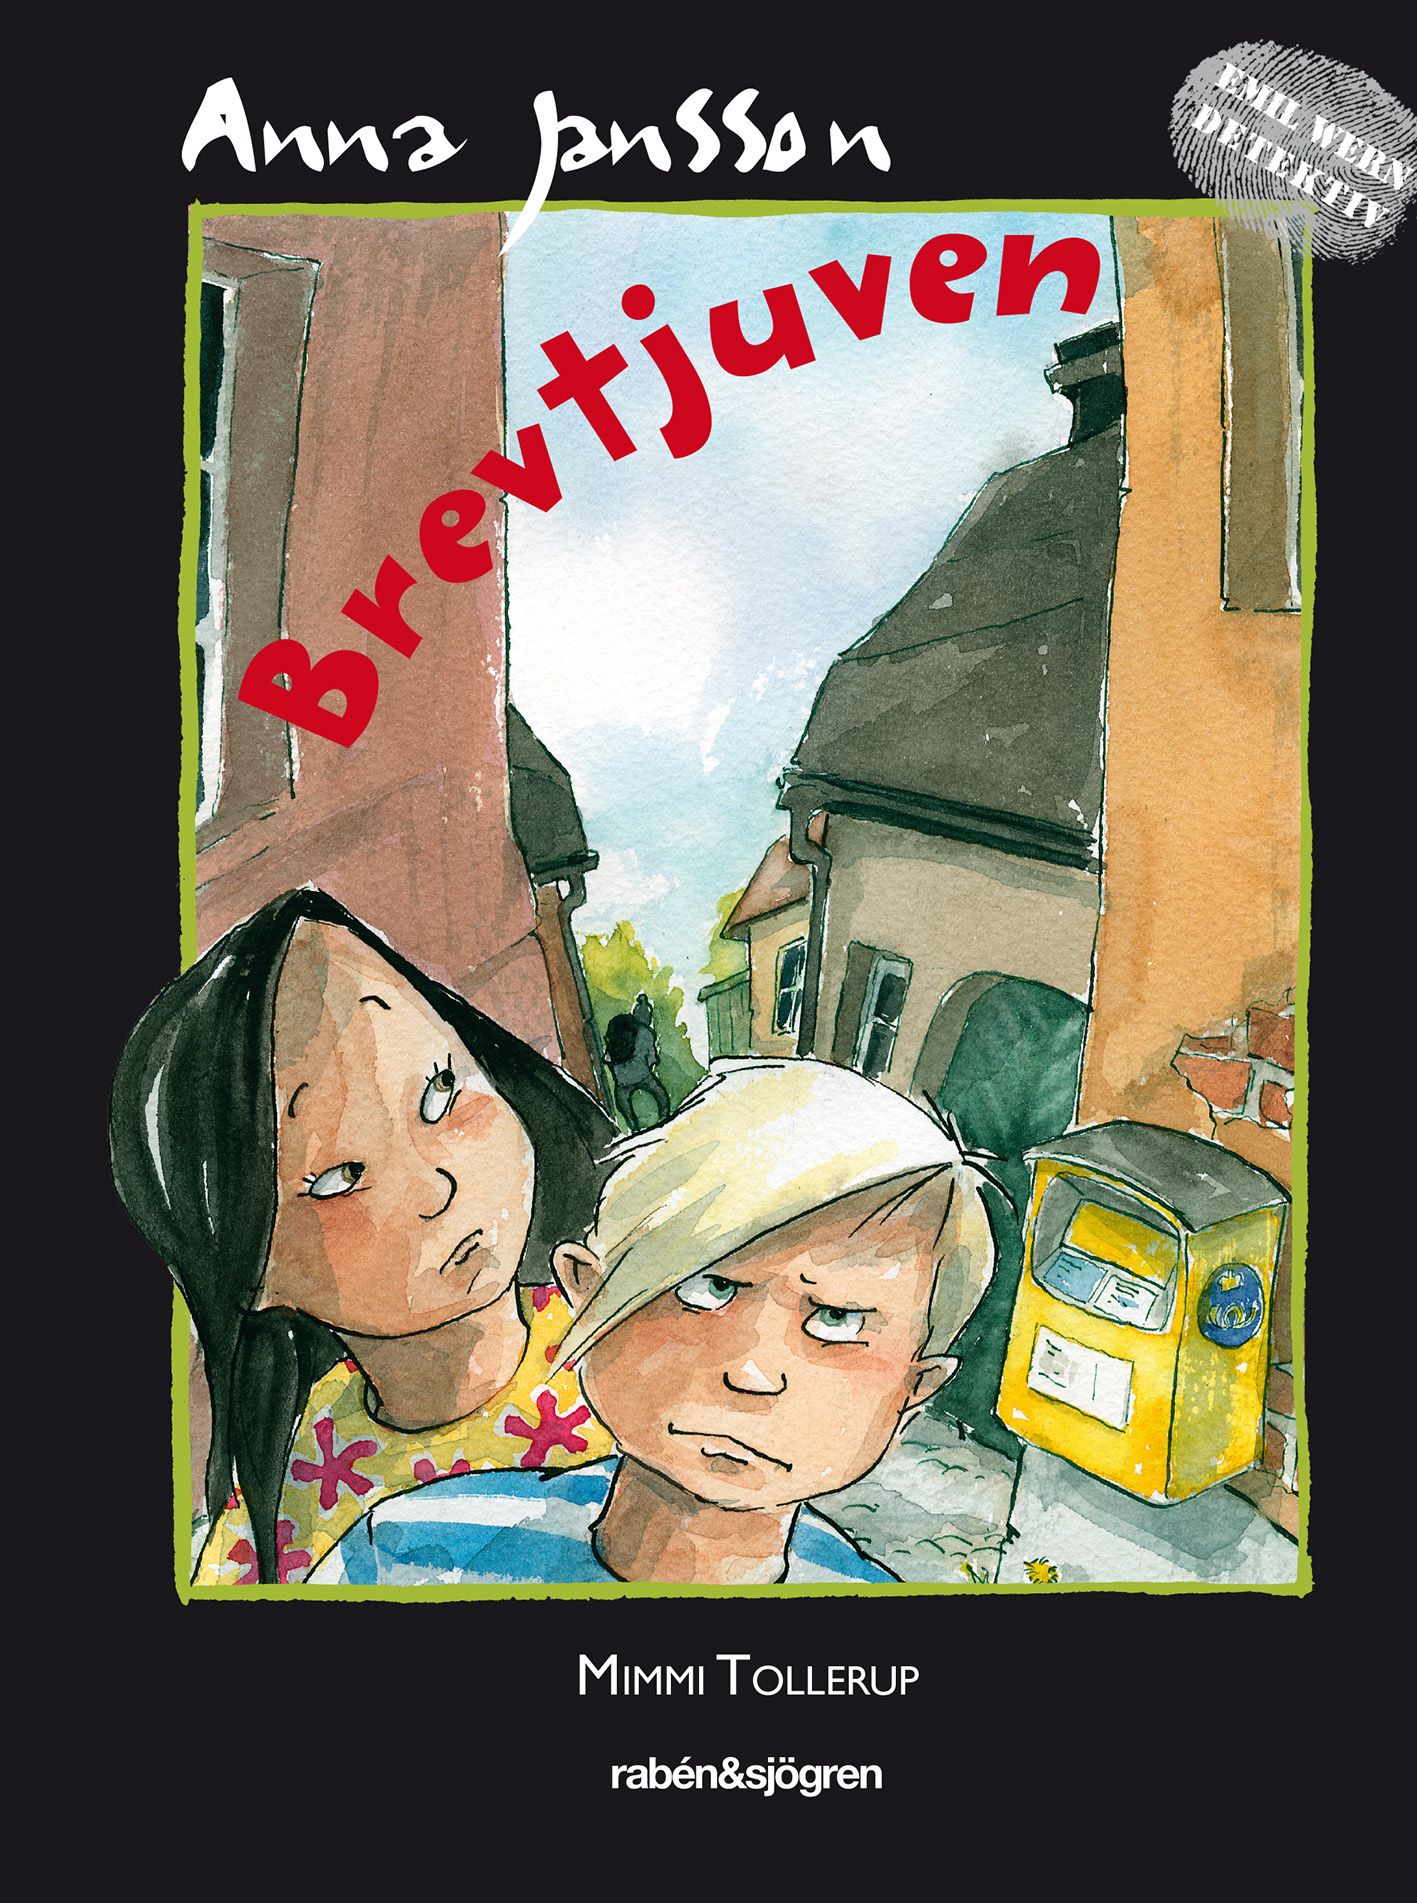 Brevtjuven, eBook by Anna Jansson